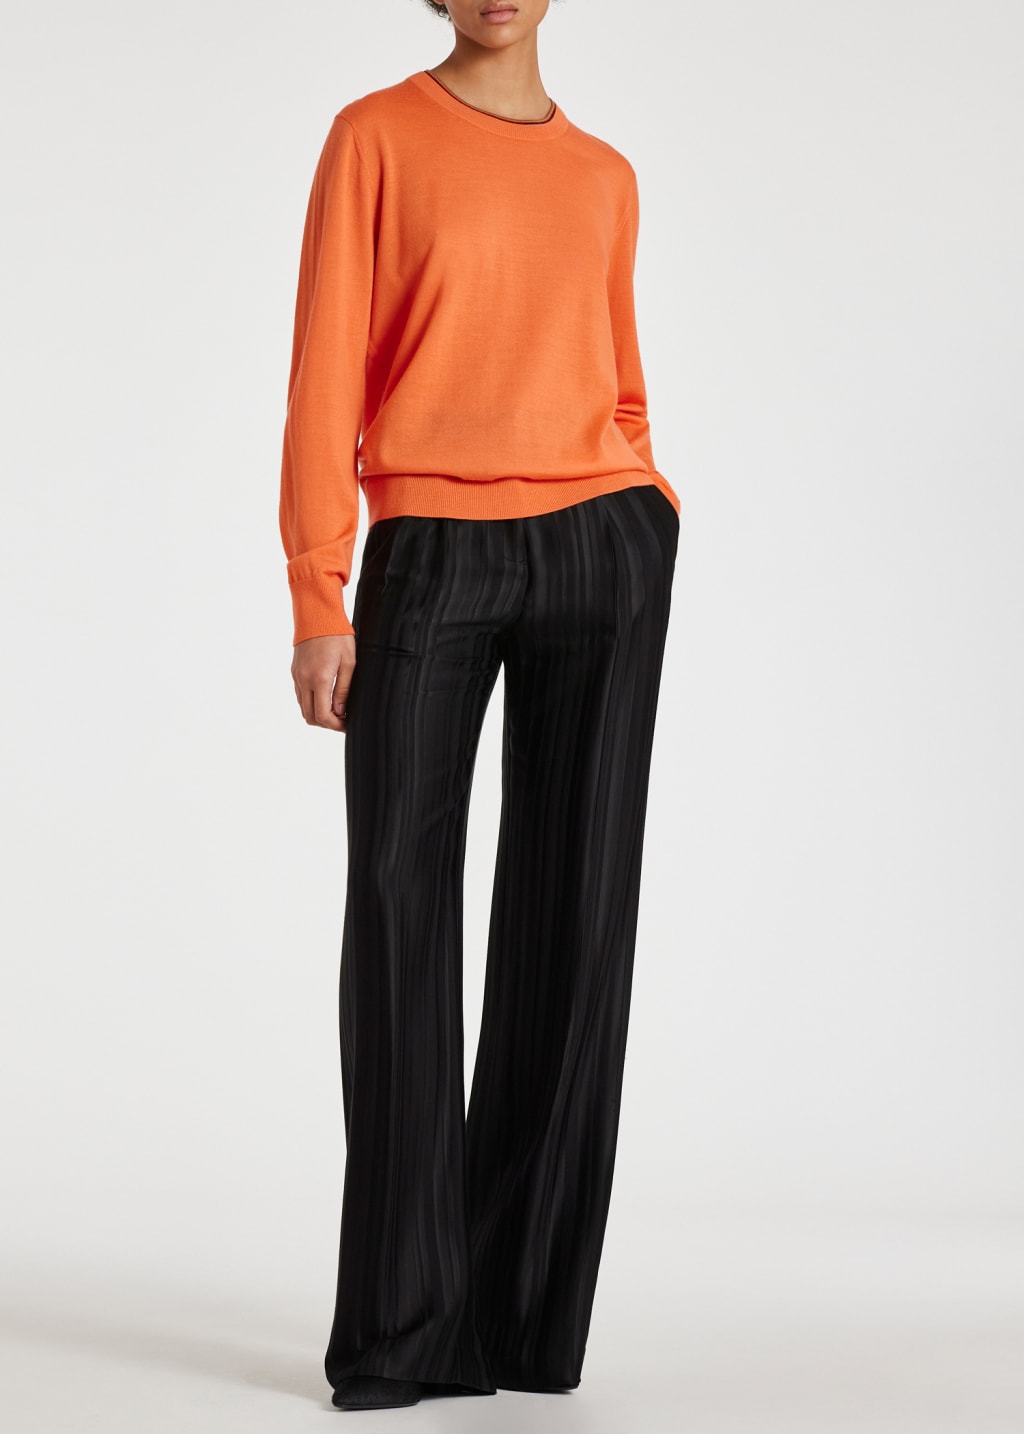 Model View - Women's Orange Crew Neck 'Signature Stripe' Sweater Paul Smith